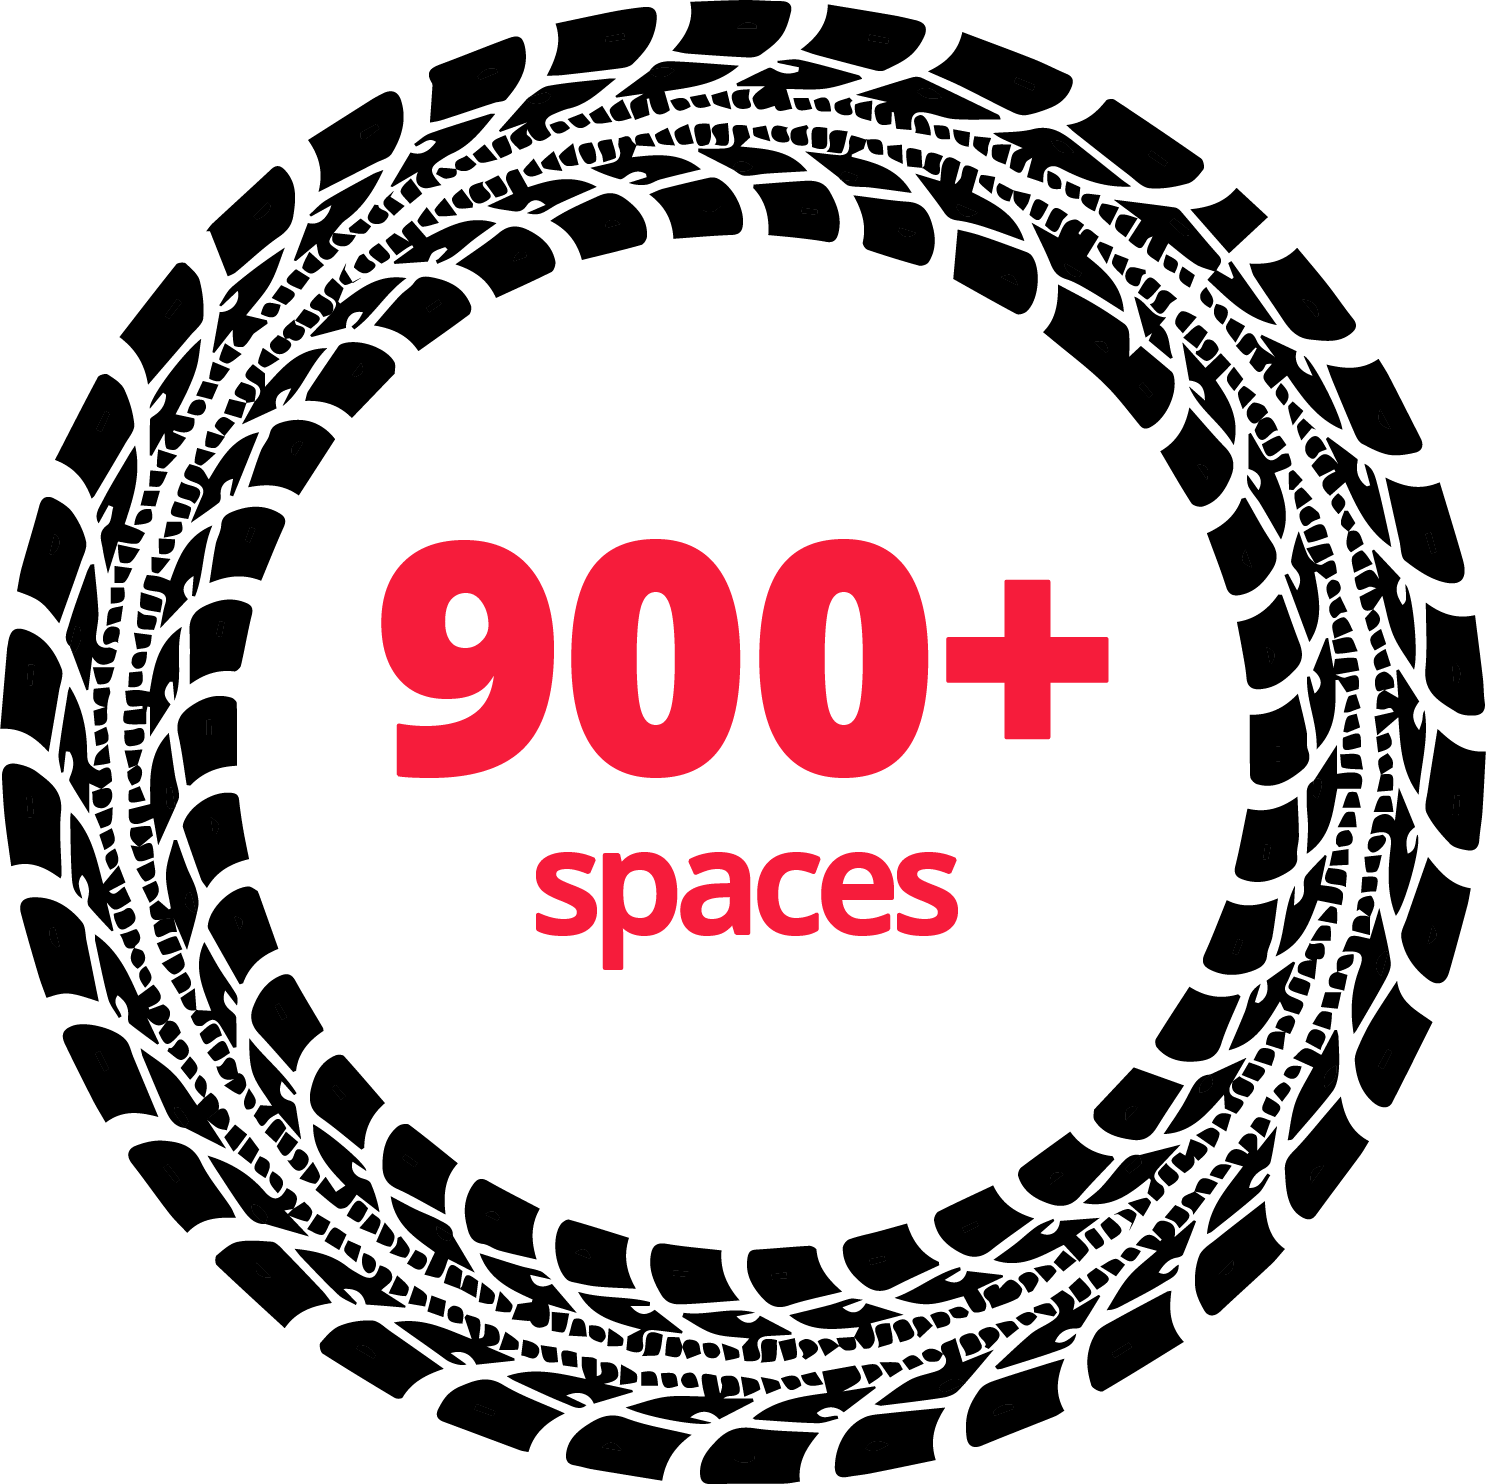 900+ Spaces